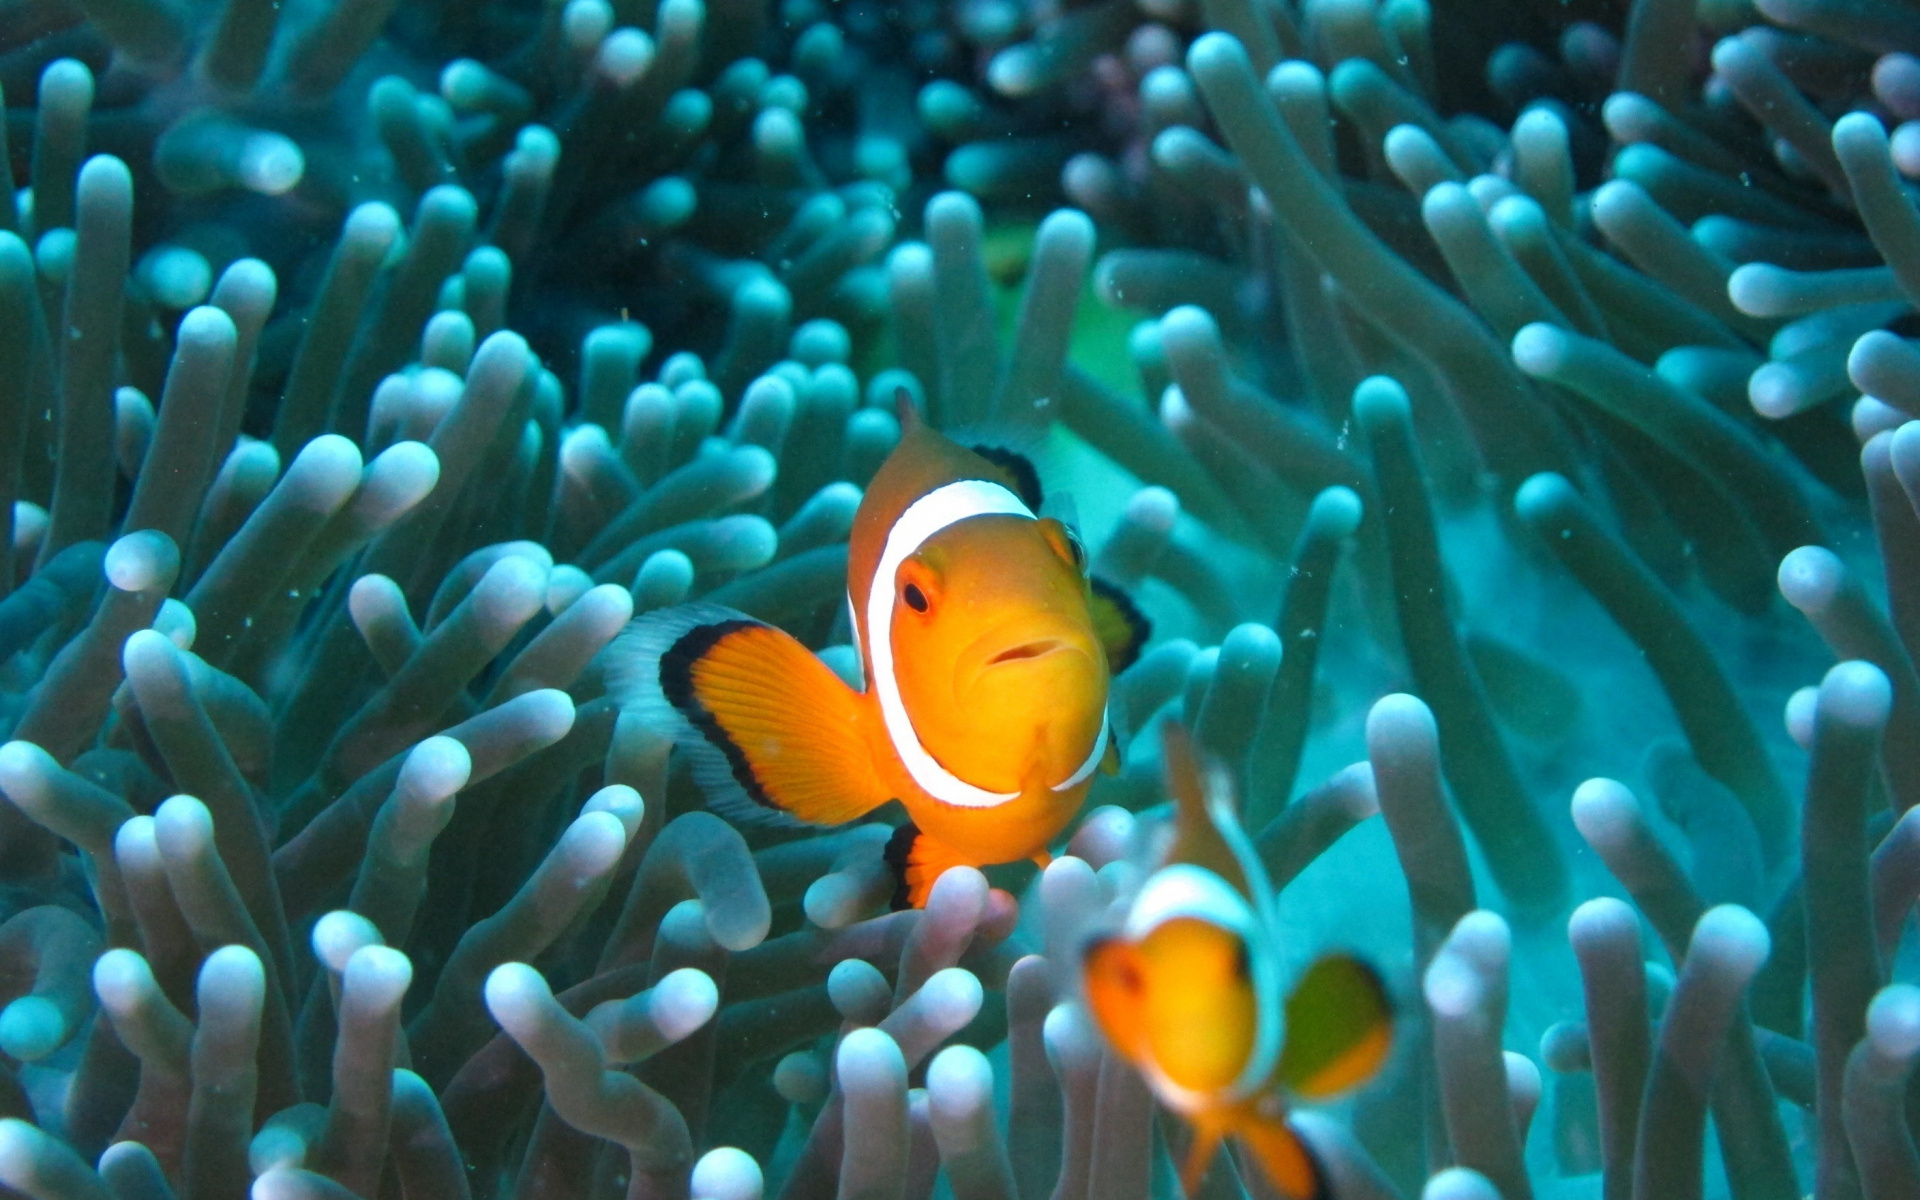 Download wallpaper, Clownfish underwater beauty, Widescreen background, Stunning HD image, 1920x1200 HD Desktop